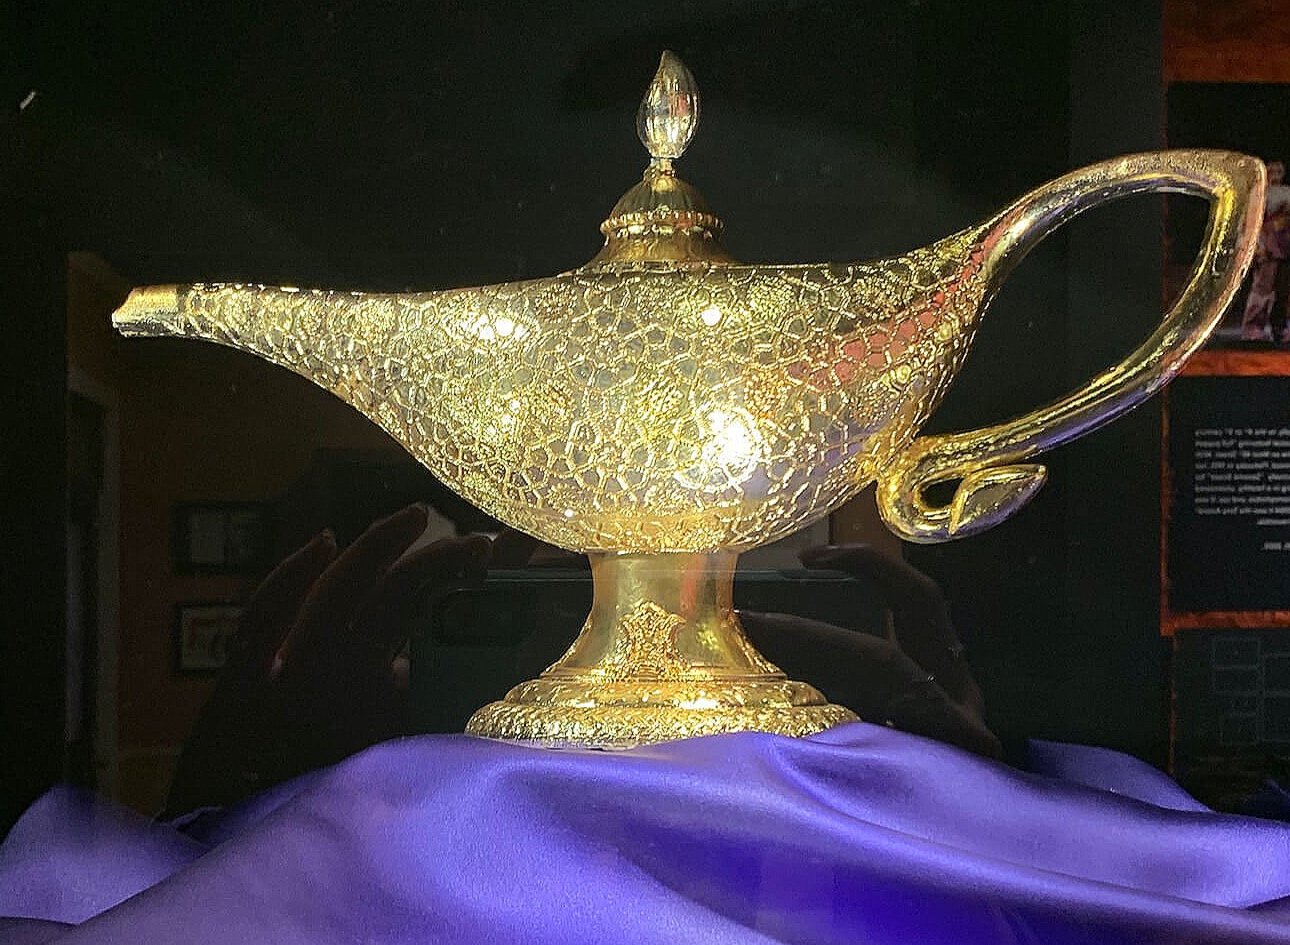  Genie lamp from  Aladdin   